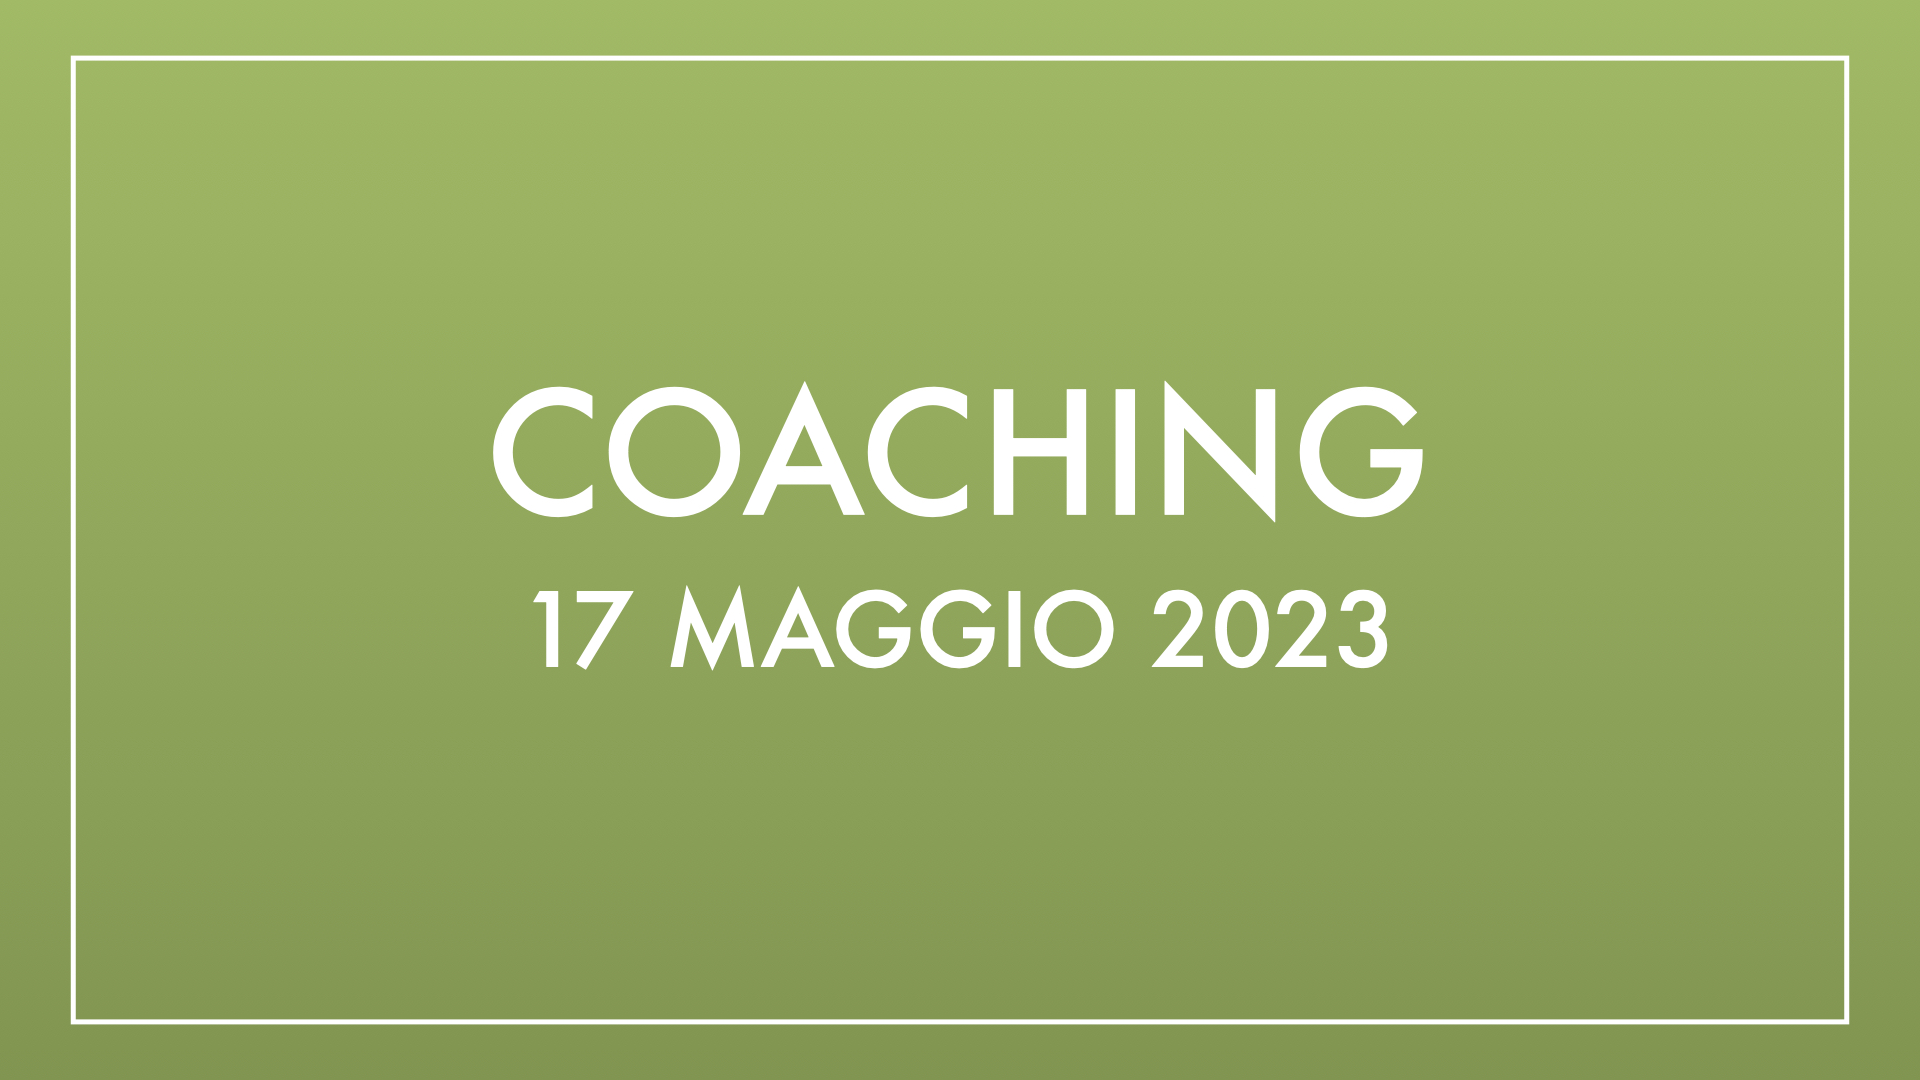 Coaching 17 maggio 2023